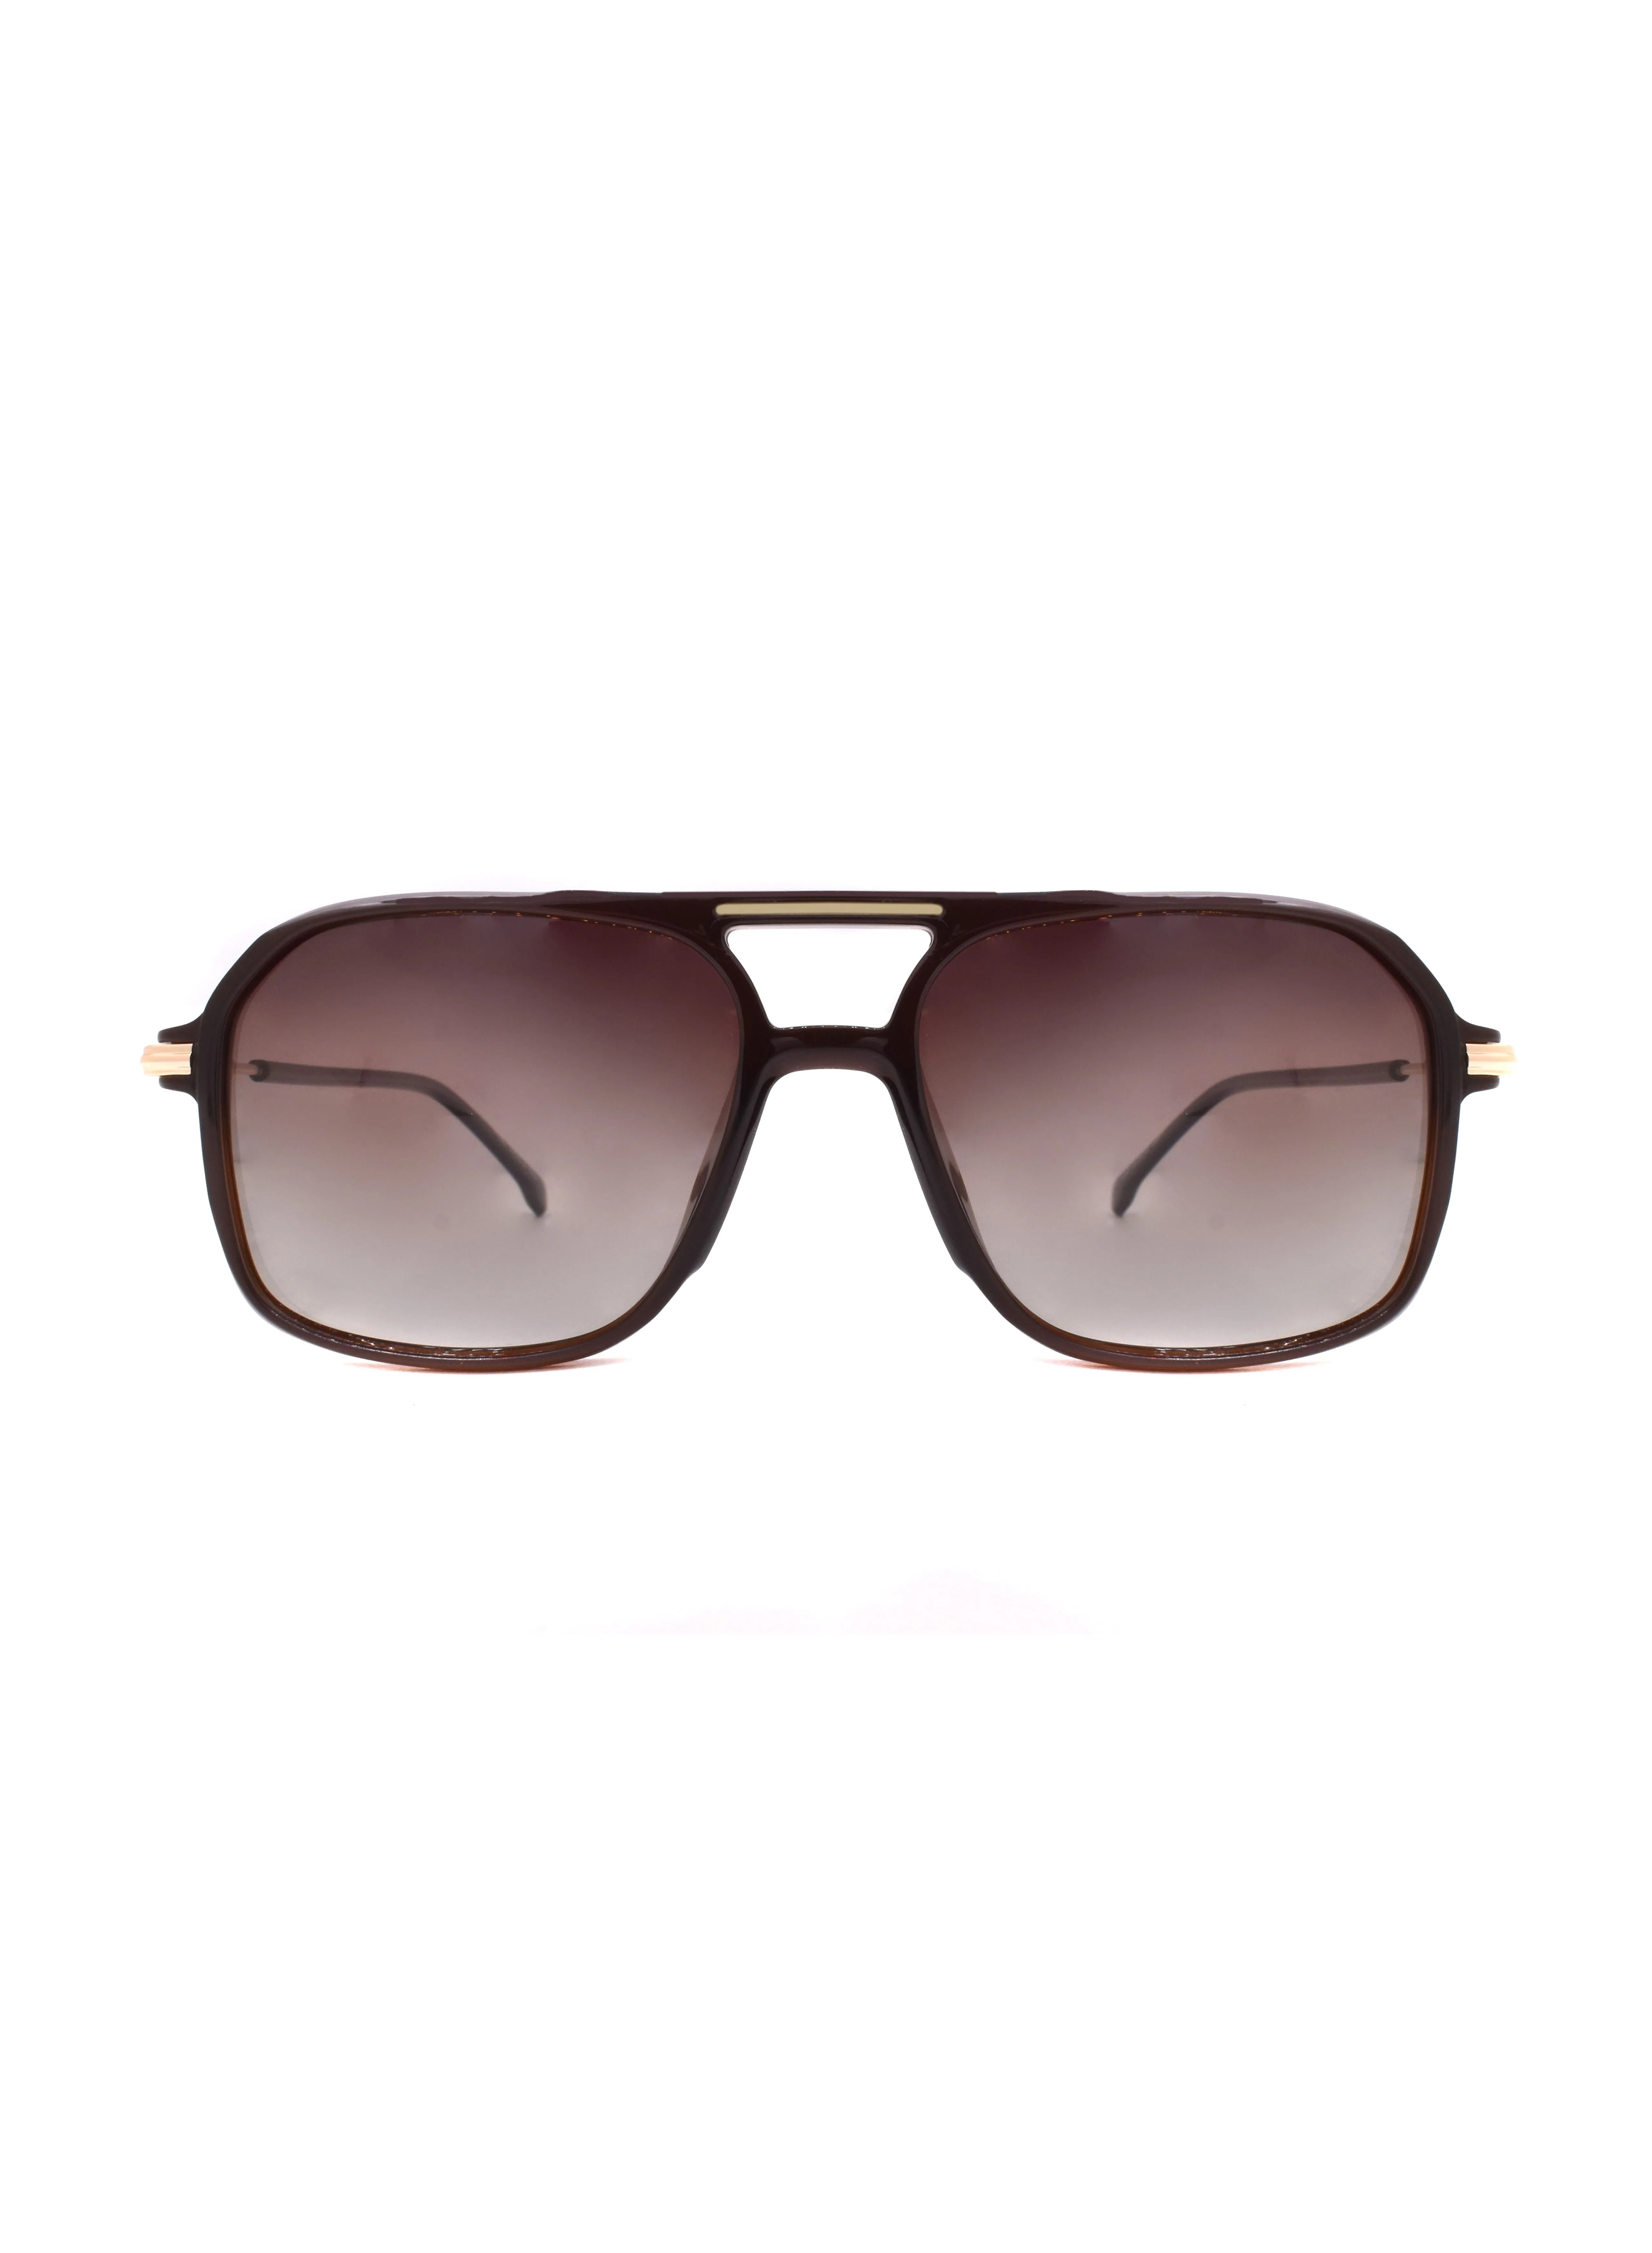 MEC Square/Aviator Shape Sunglasses 59993-C4